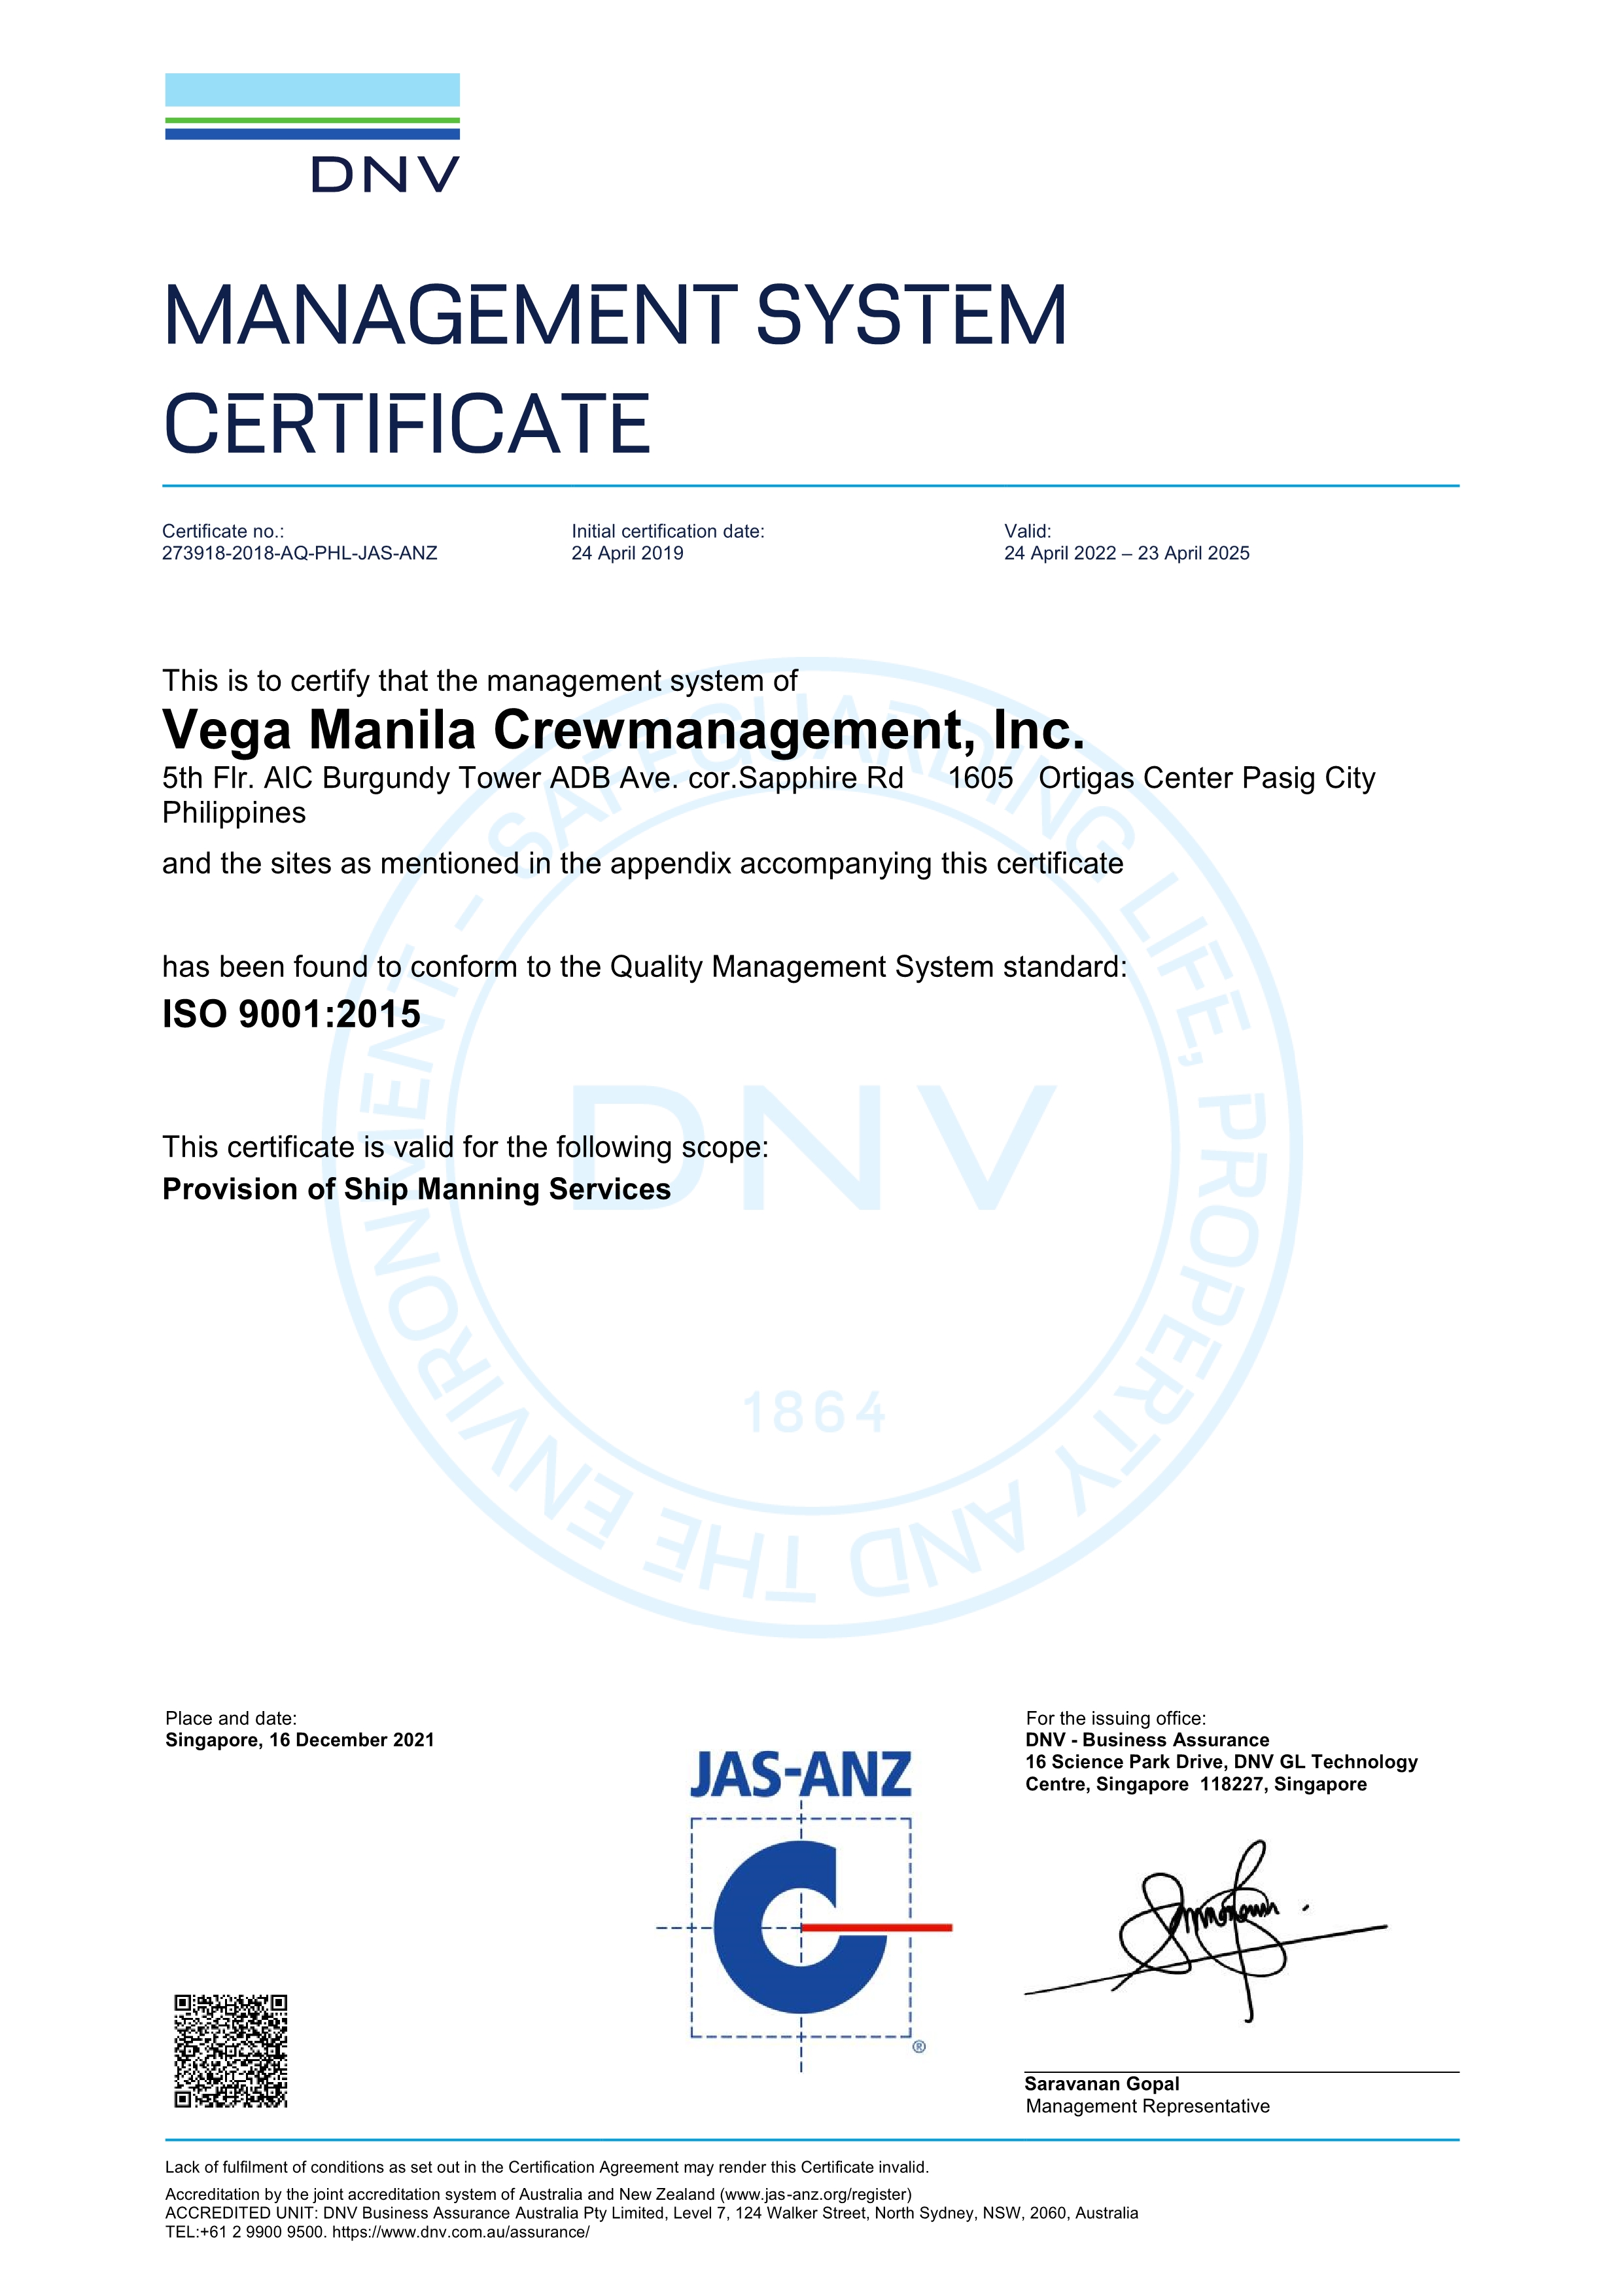 vega-manila-crewmanagement-inc-iso-2015-dnvgl-page1